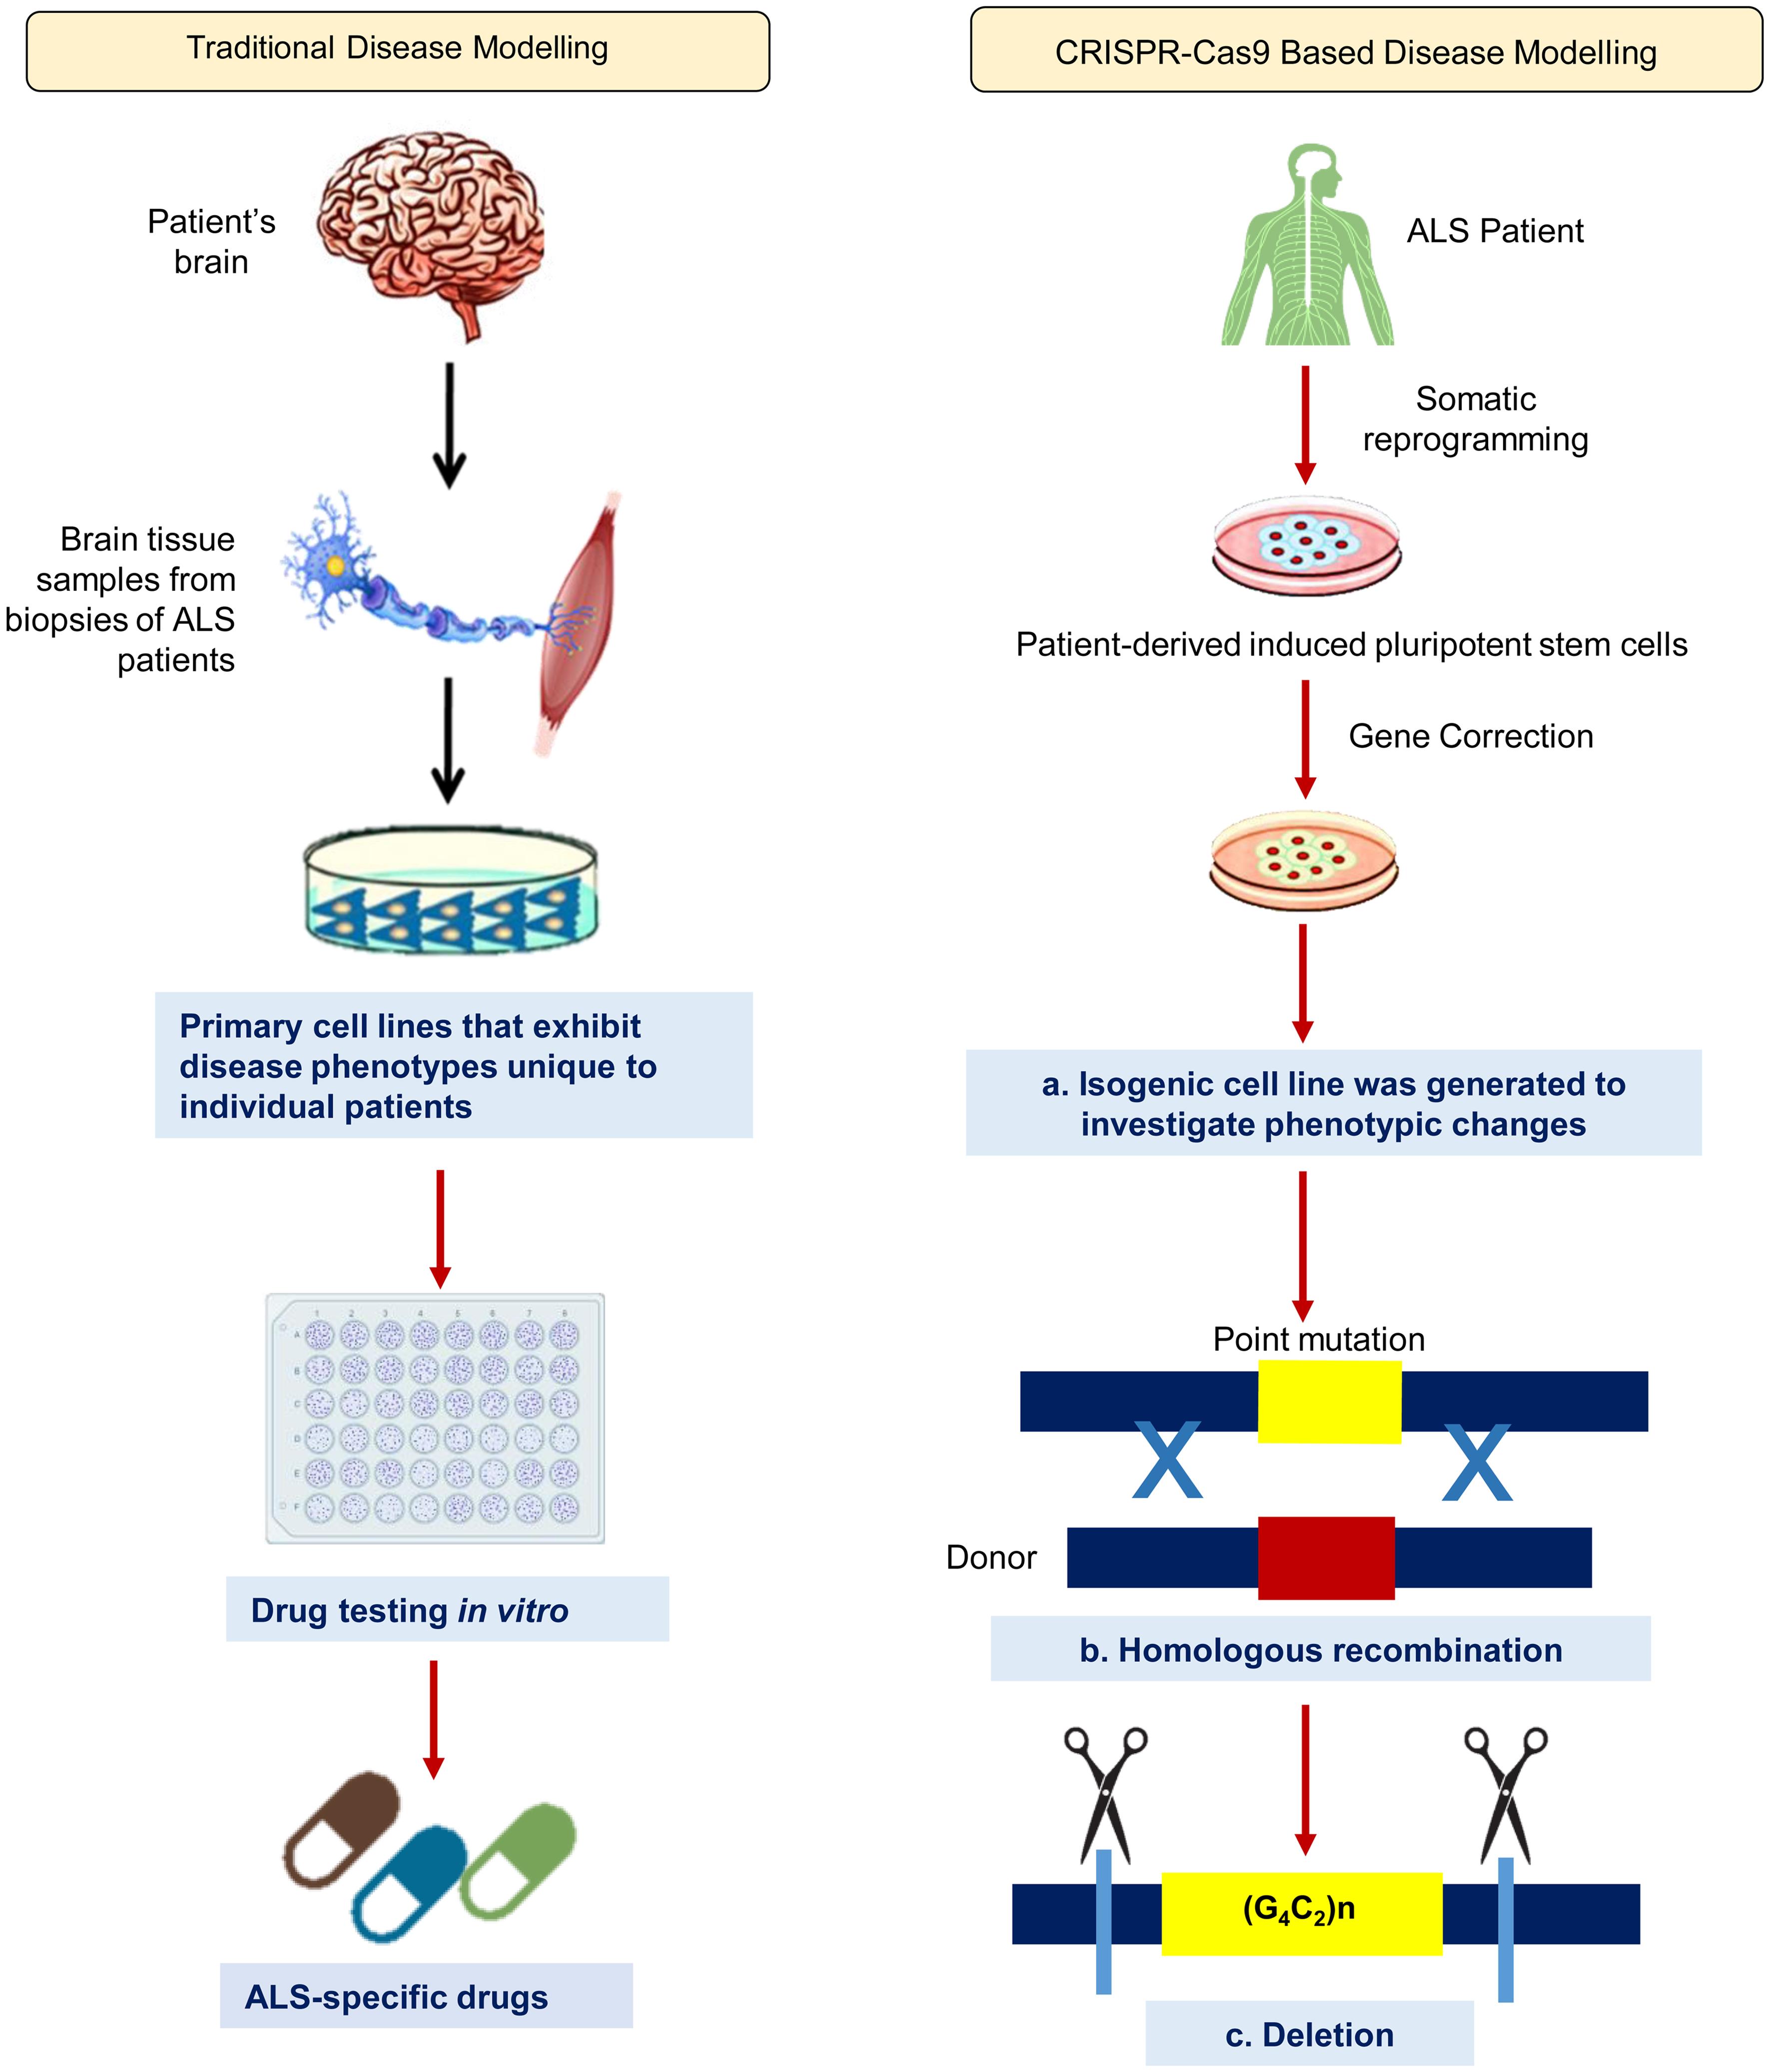 Disease modeling using CRISPR/Cas9 versus conventional methods.